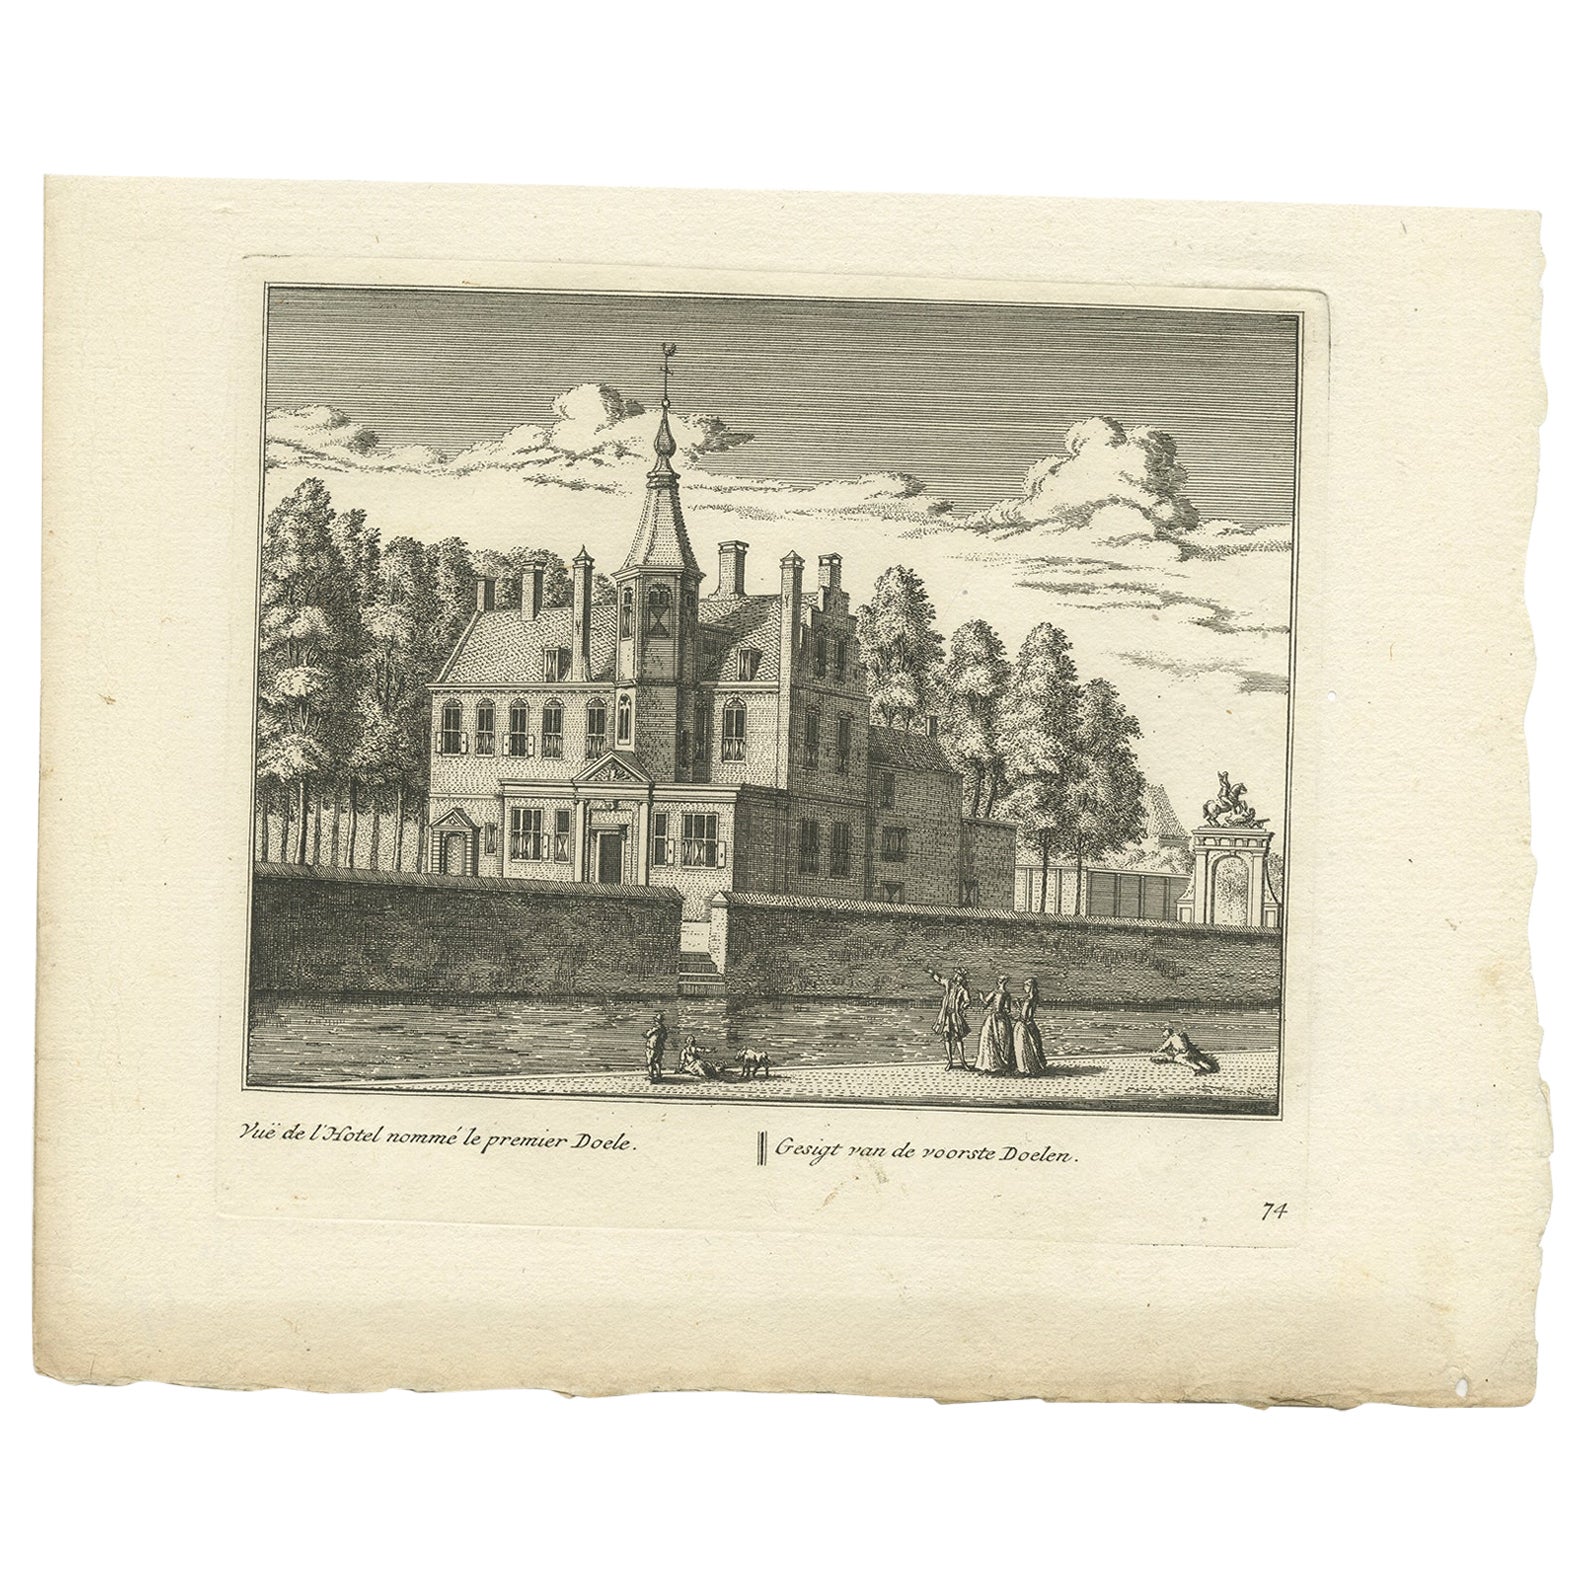 Antique Print of the 'Doelen' Court of University City Leiden, Holland, c1800